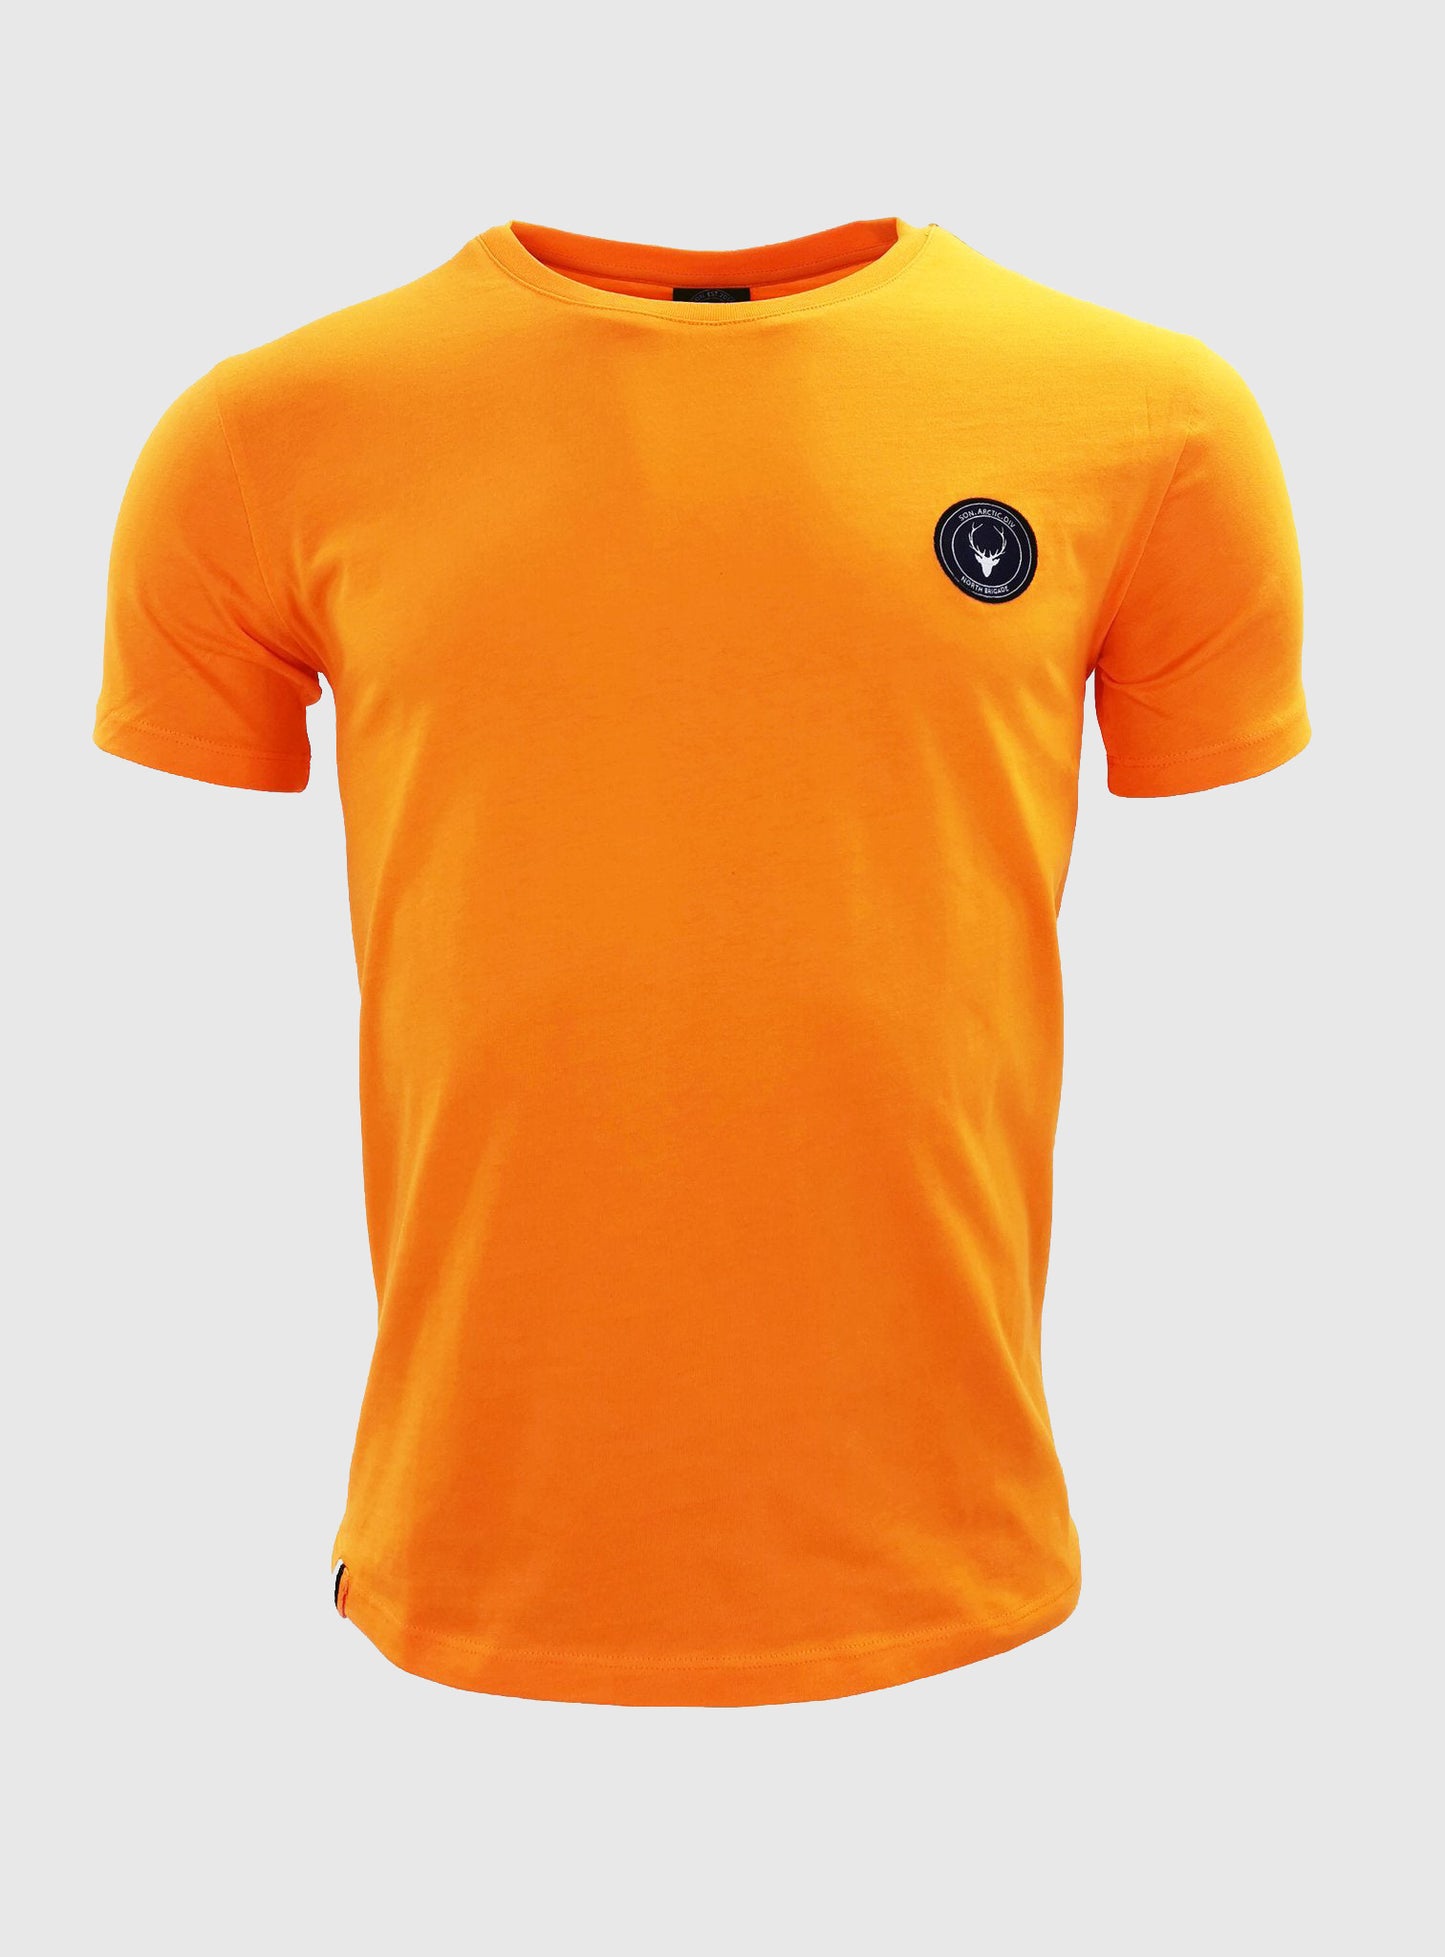 Orange t-shirt slim fit